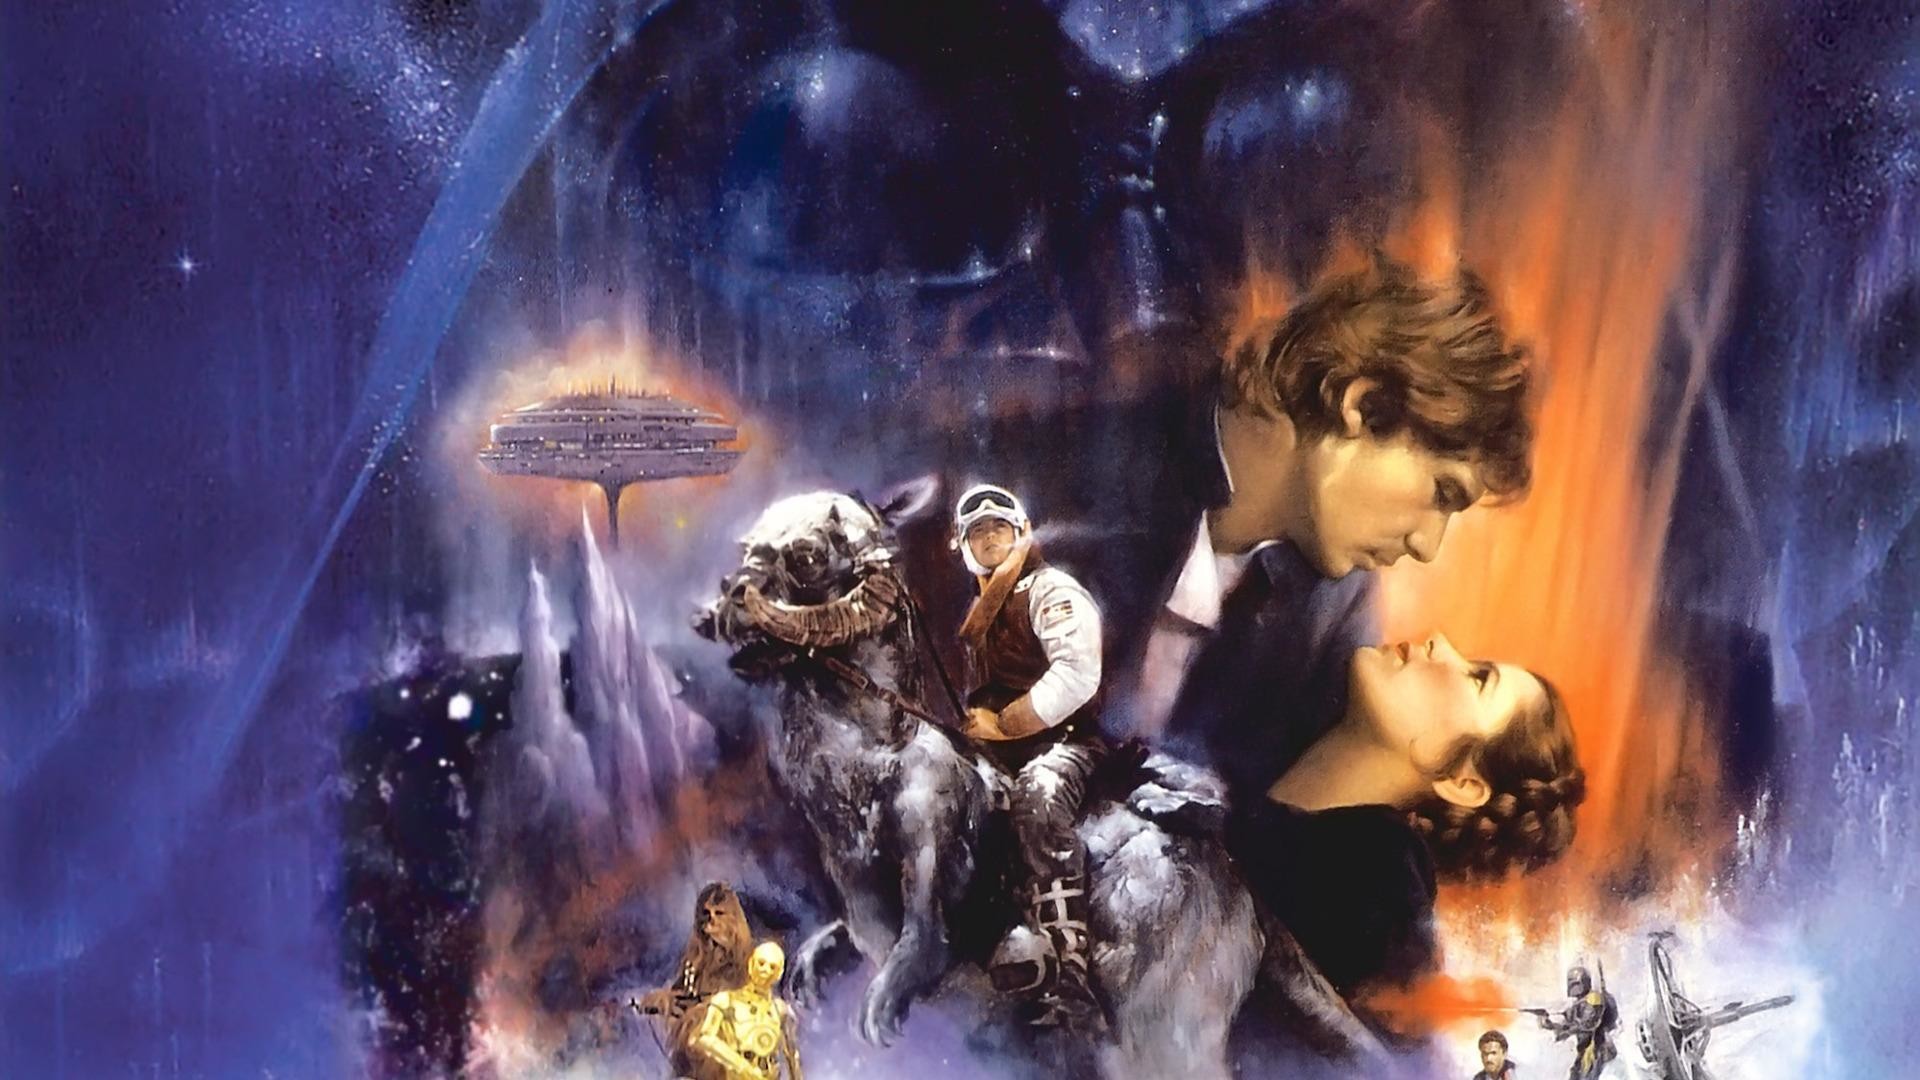 1920x1080 Star Wars Movie Poster Wallpaper - WallpaperSafari